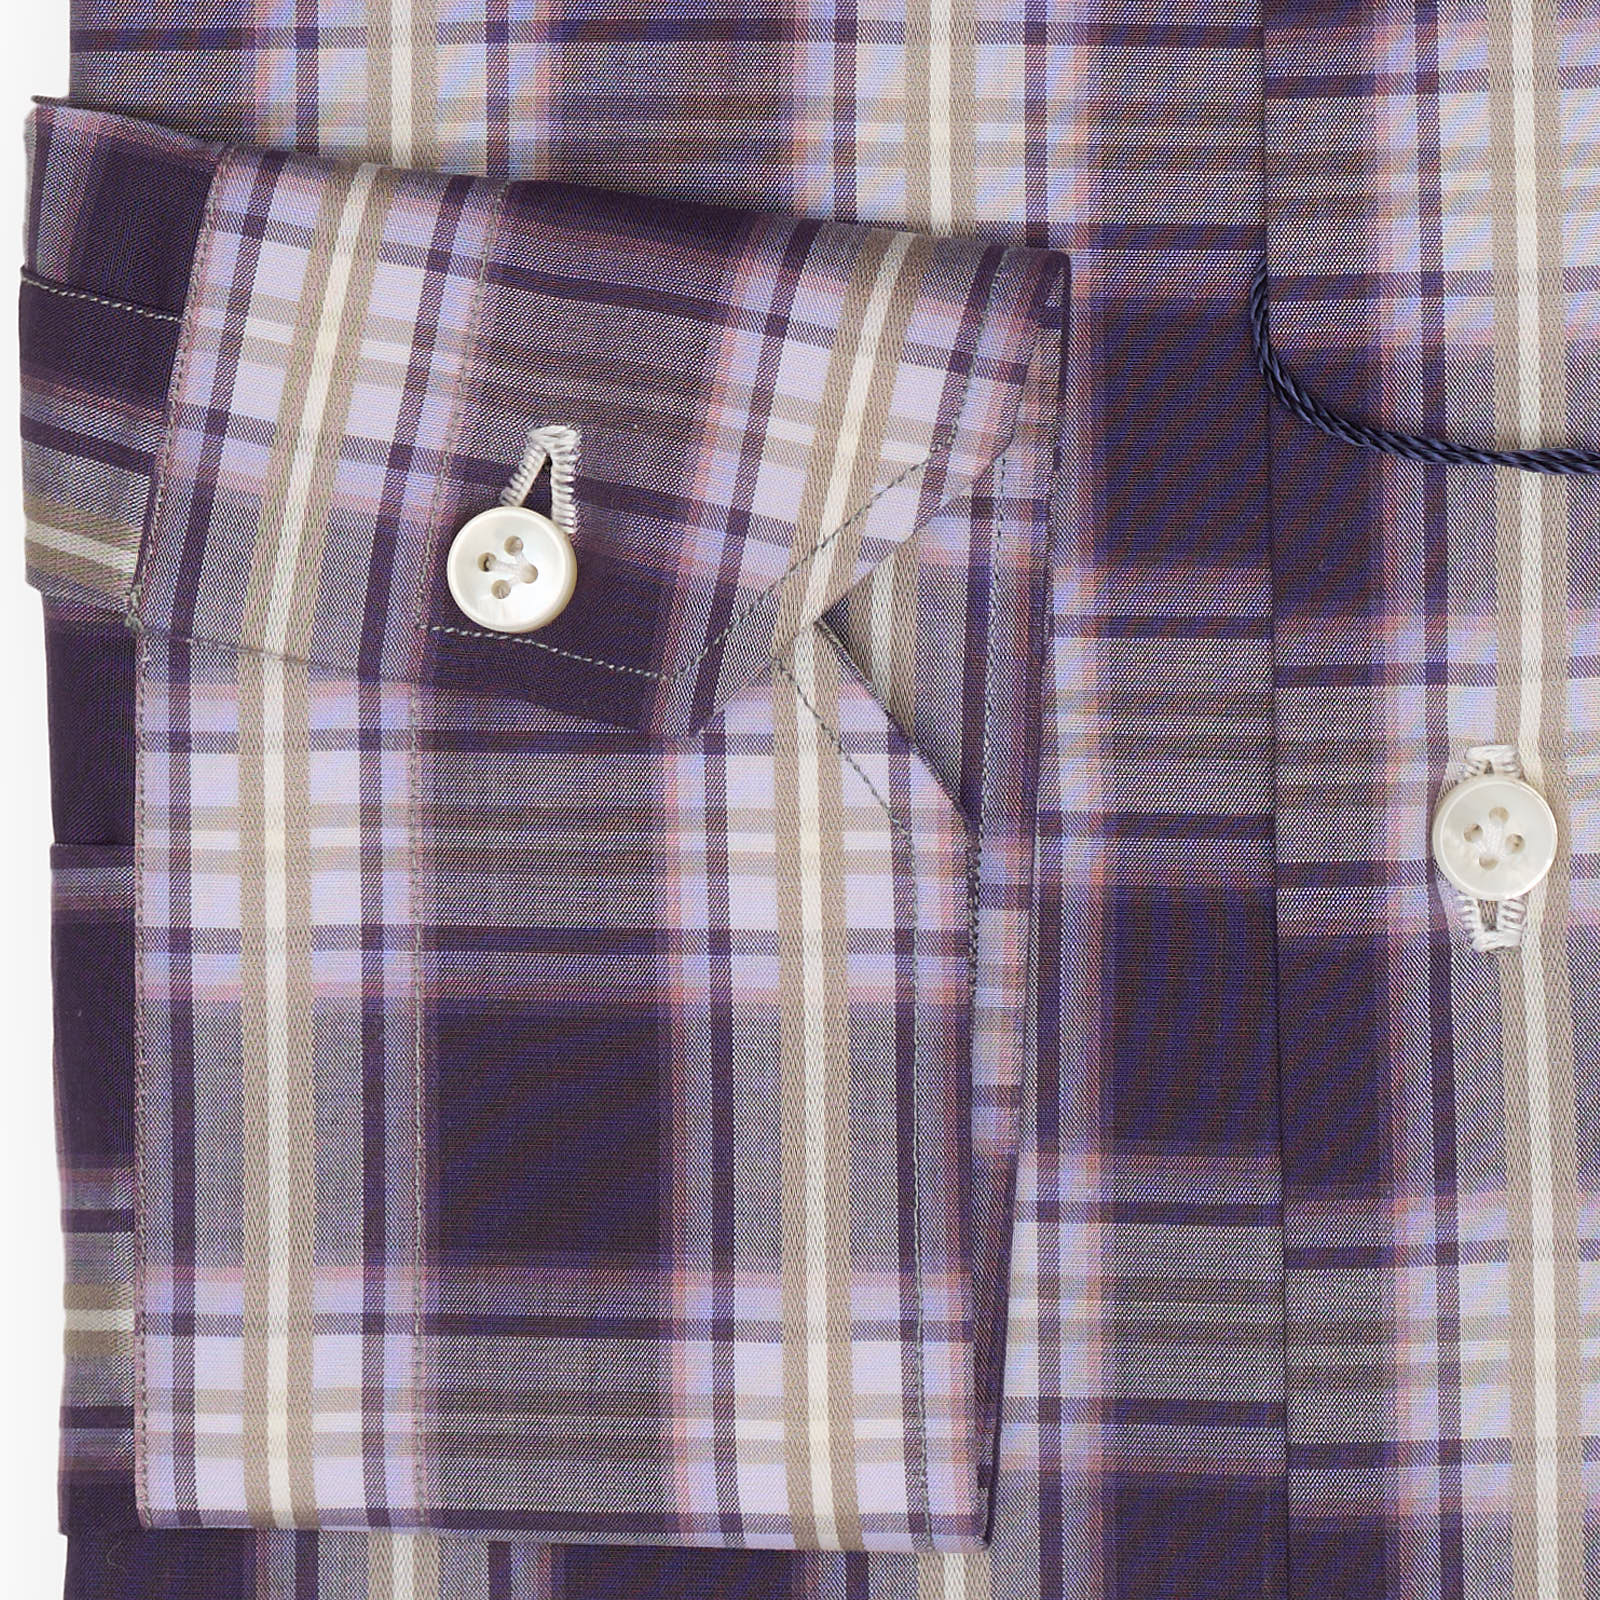 MATTABISCH for VANNUCCI Purple Plaid Cotton Dress Shirt